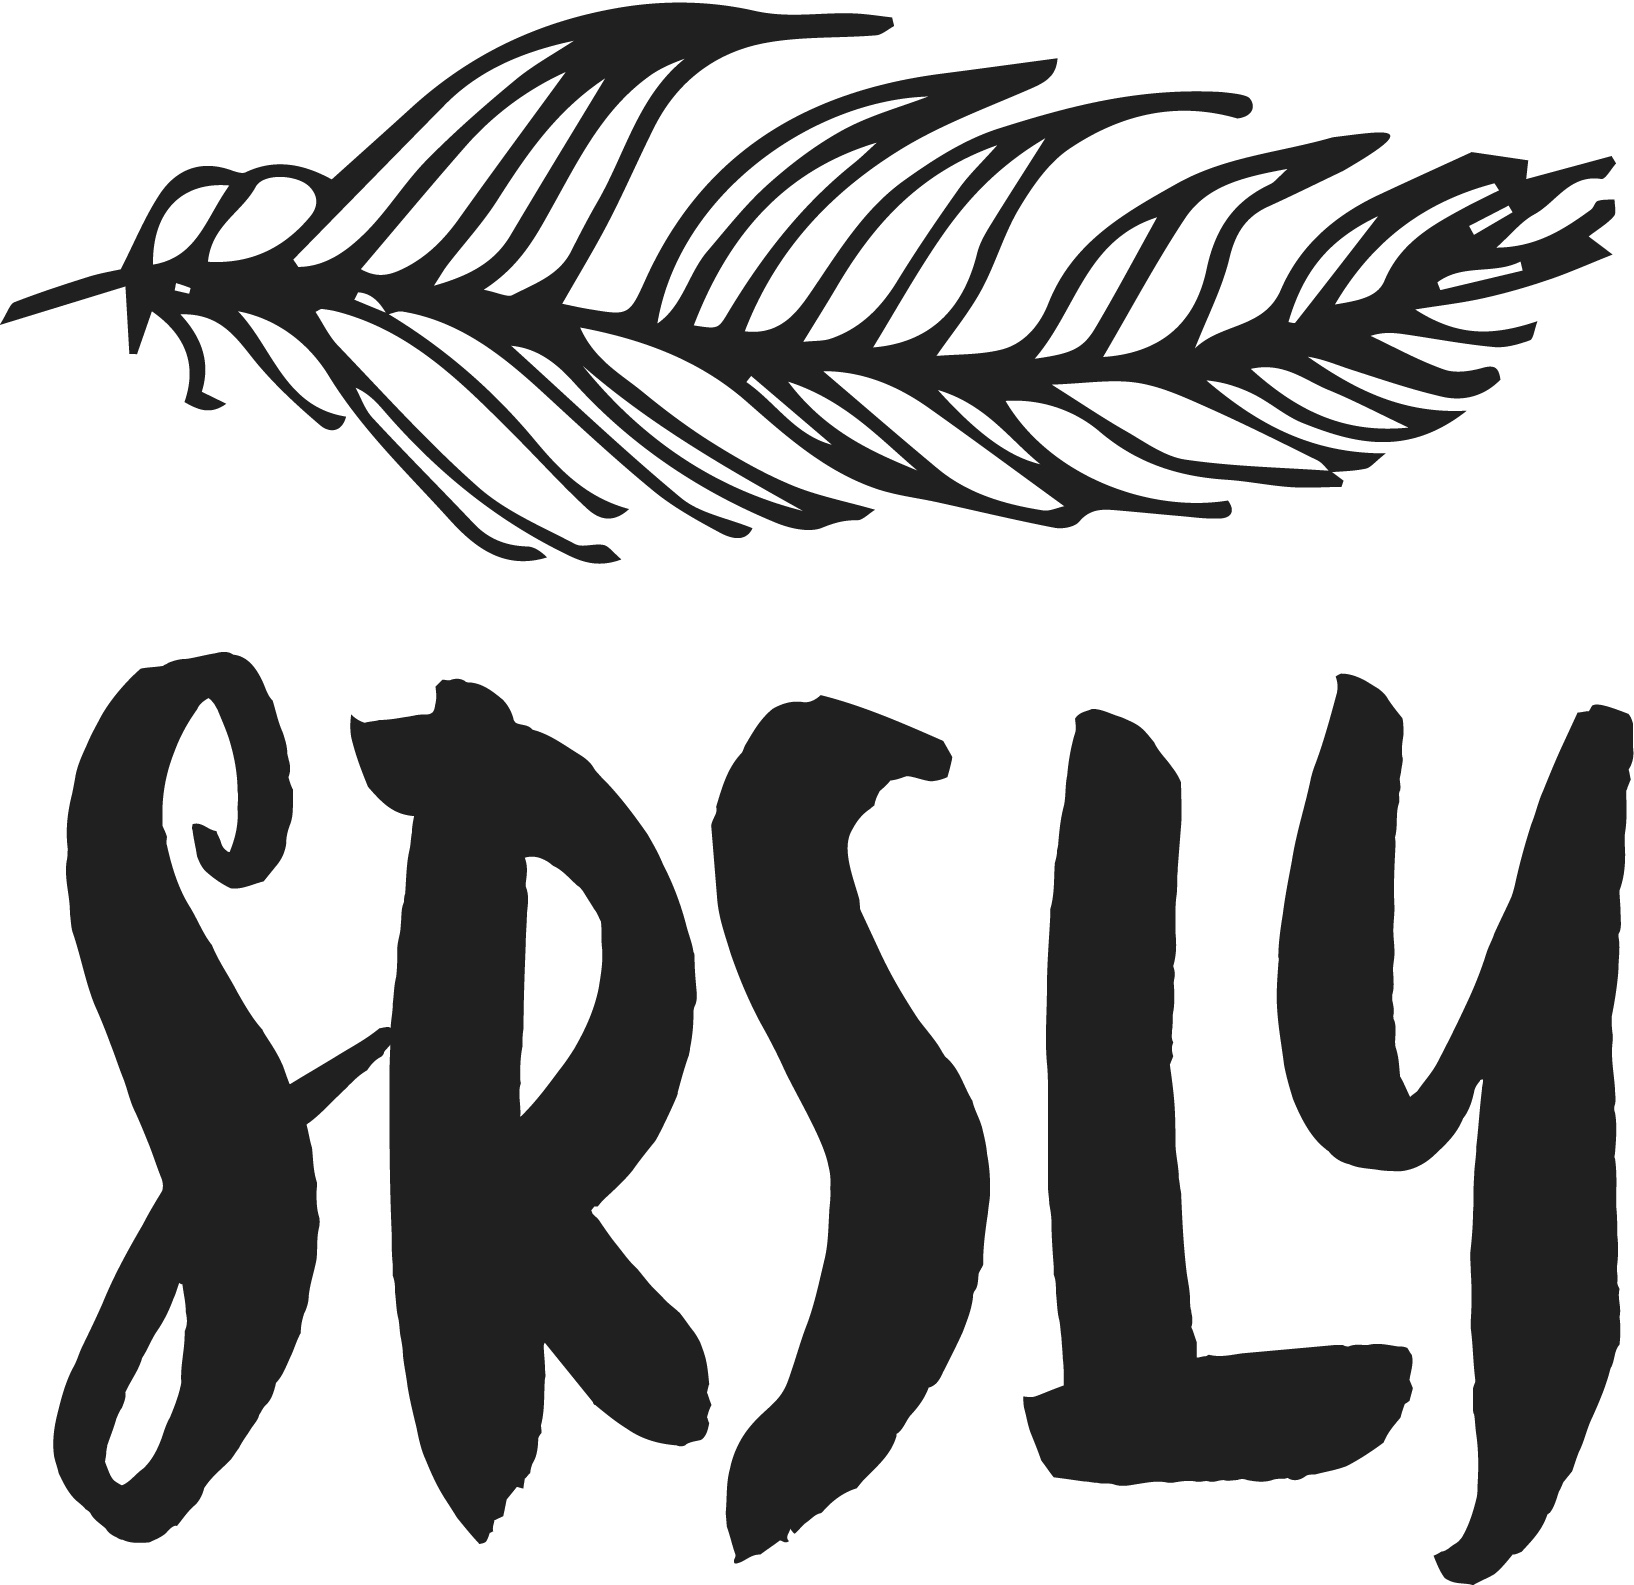 SRSLY logo final 2